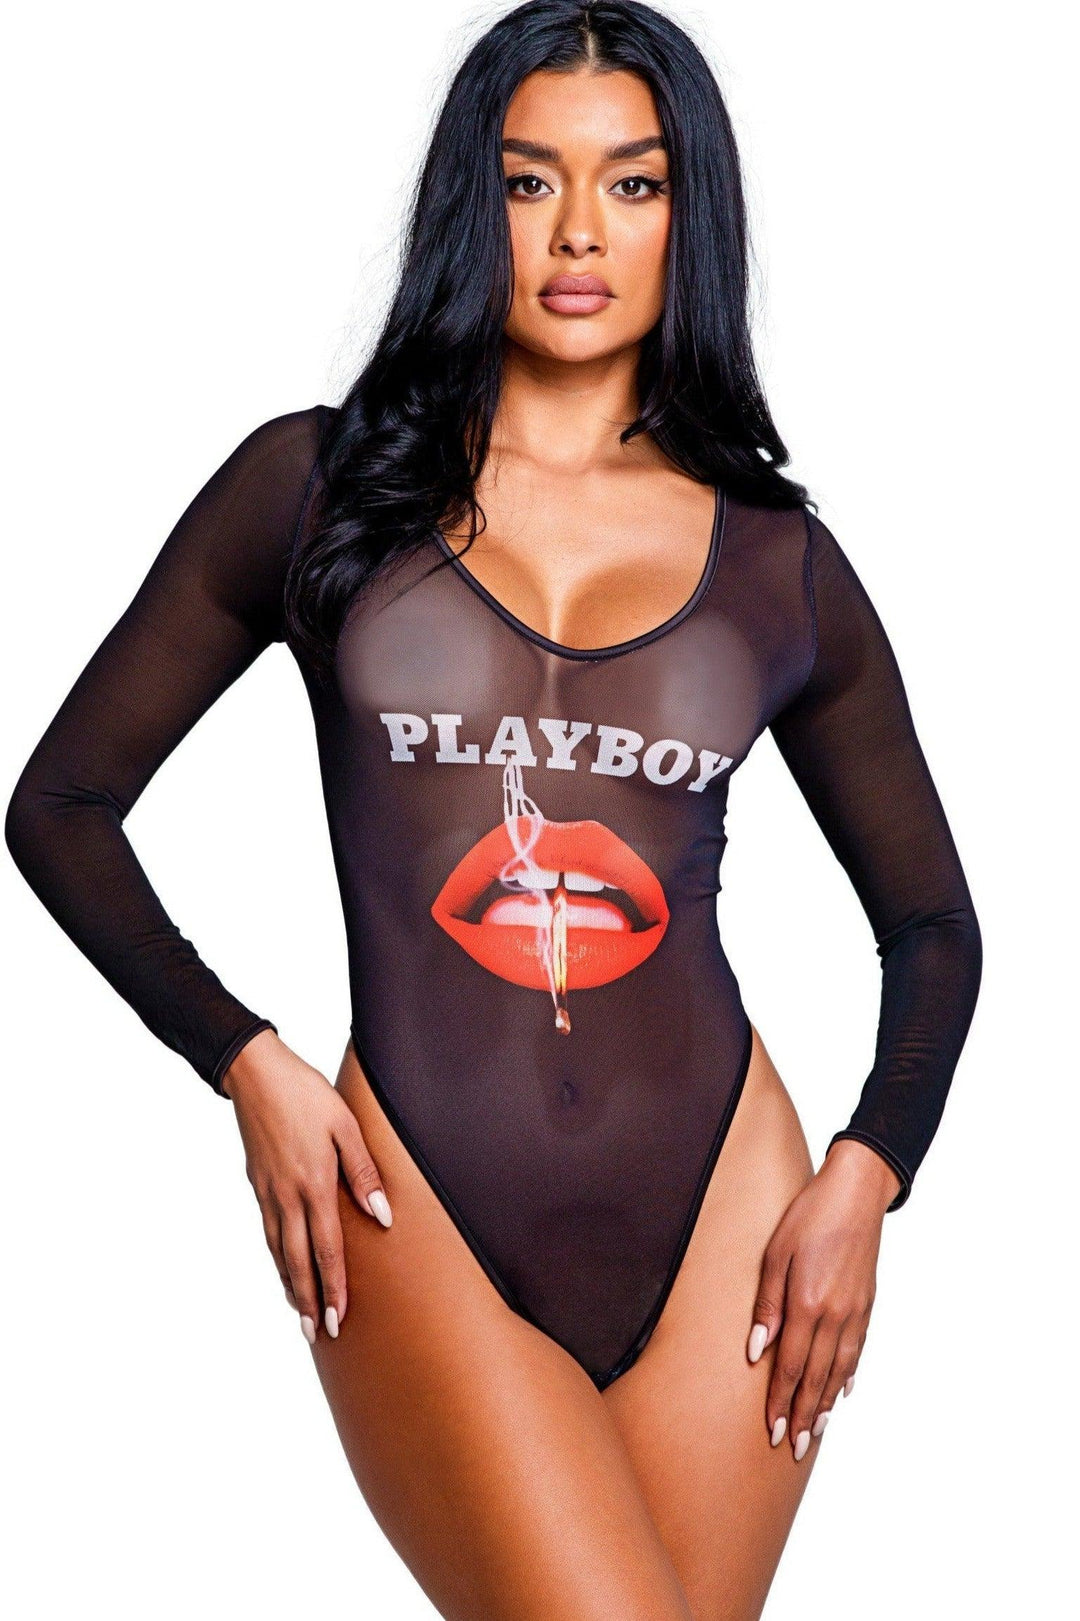 Playboy Cover Girl Teddy November 2013 - SEXYSHOES.COM